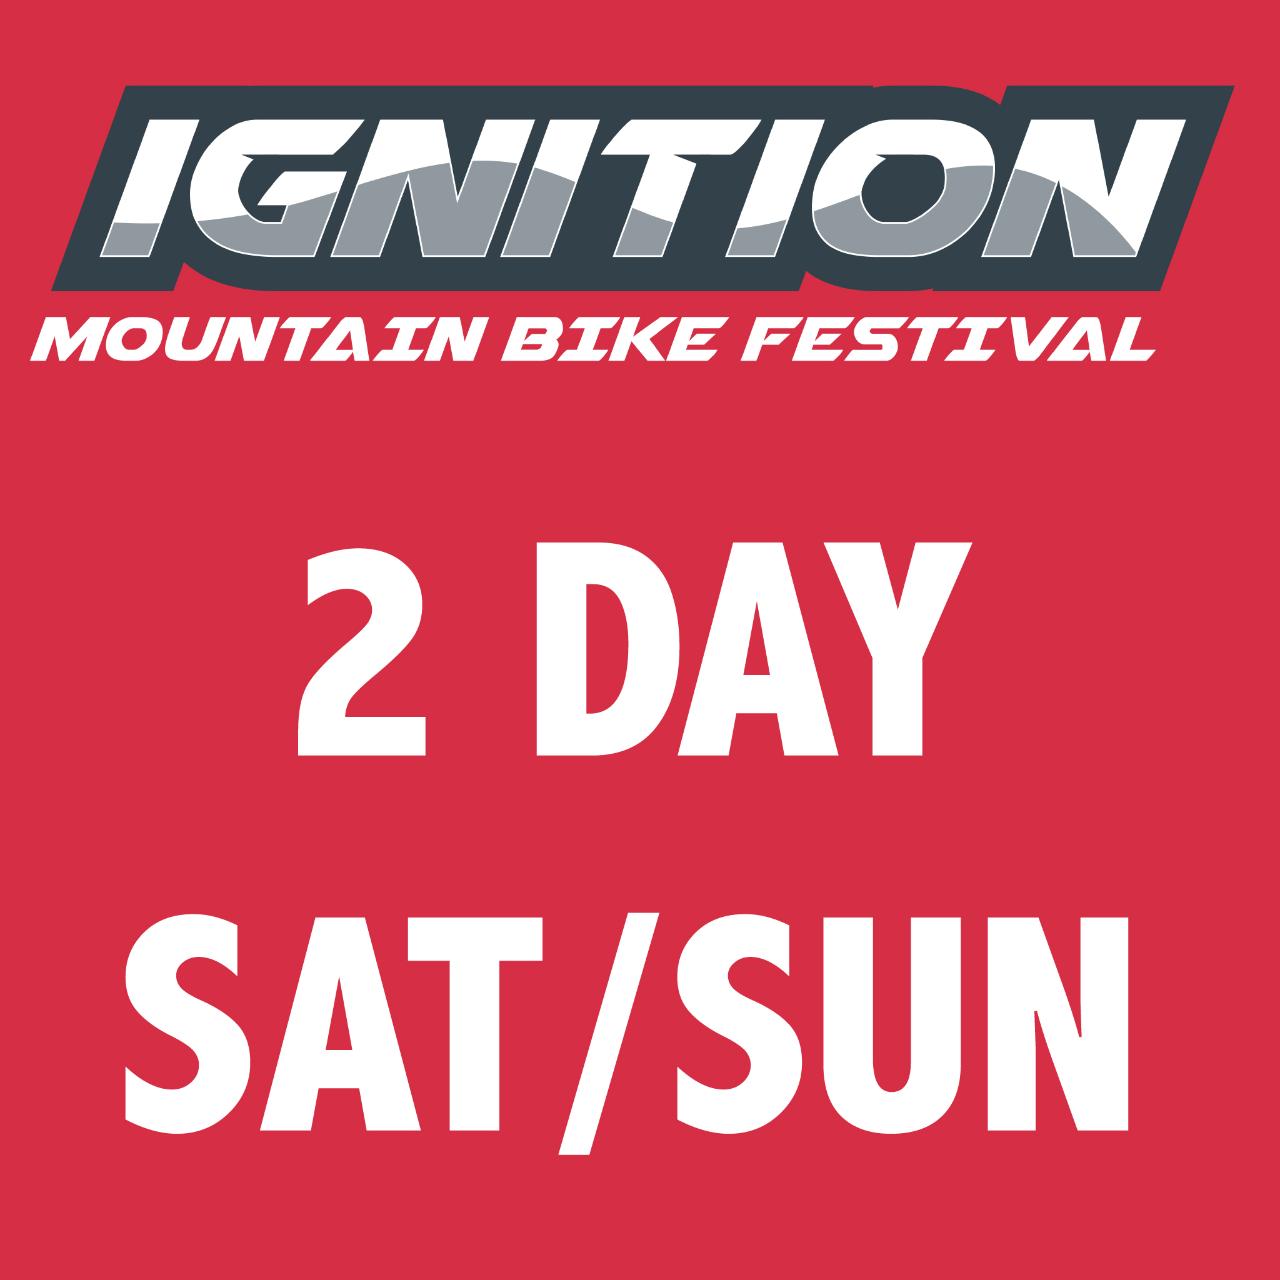 Ignition MTB Festival - 2 DAY